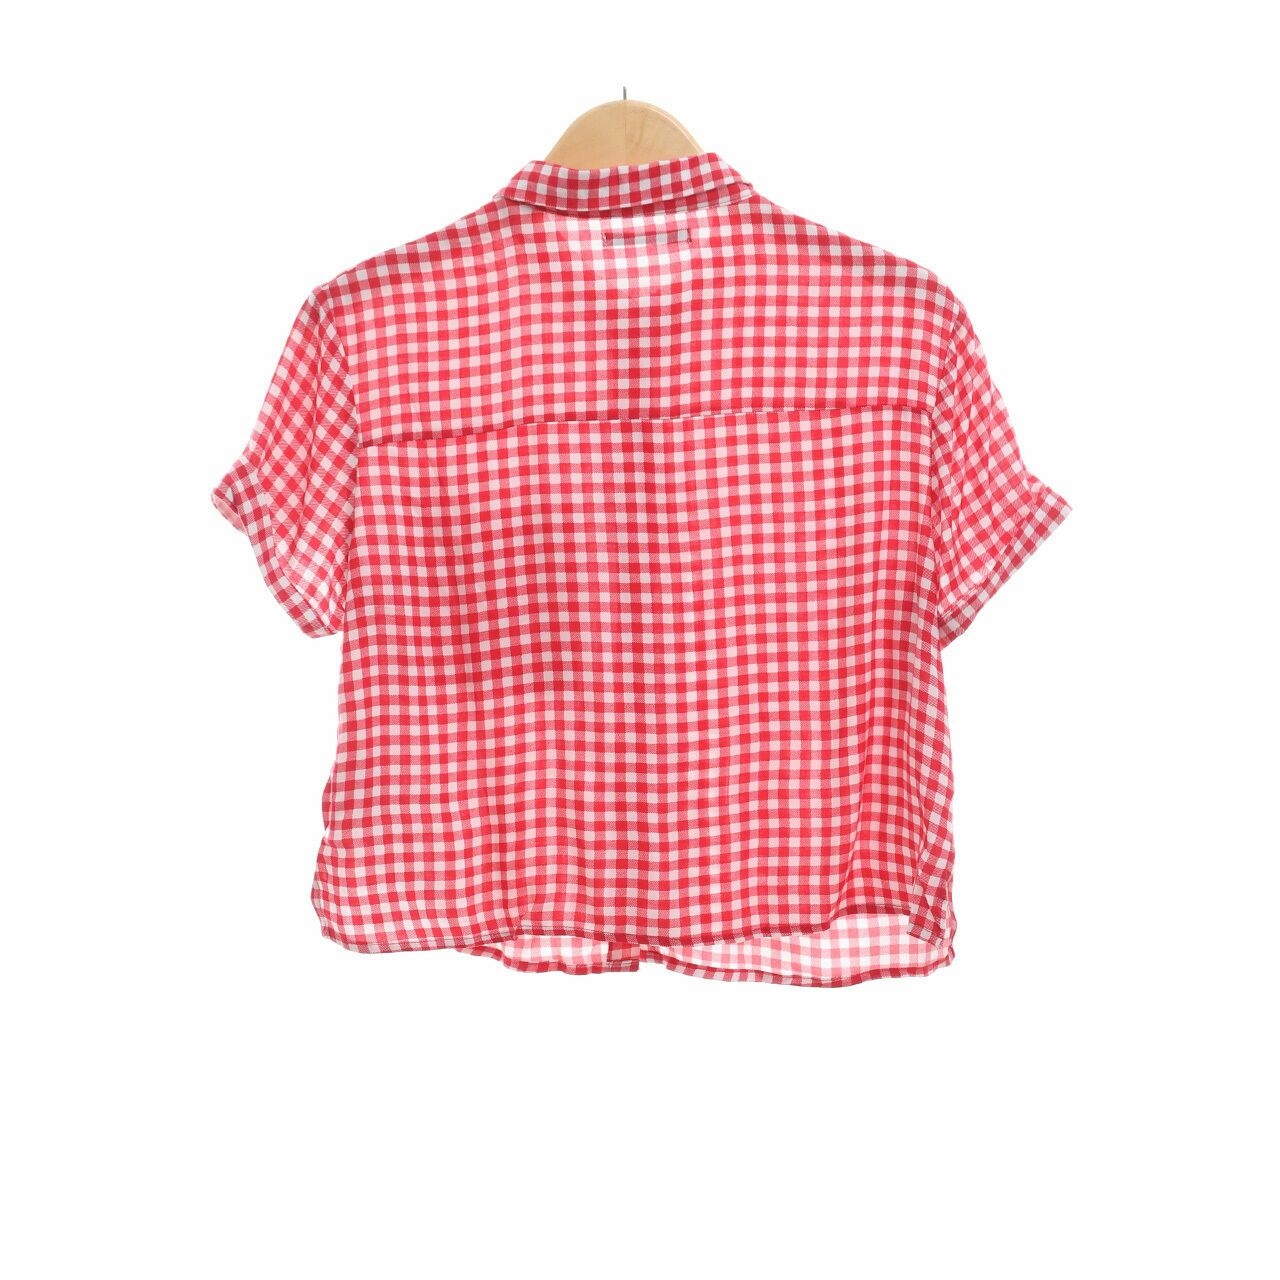 Pull & Bear Red & White Checkered Shirt